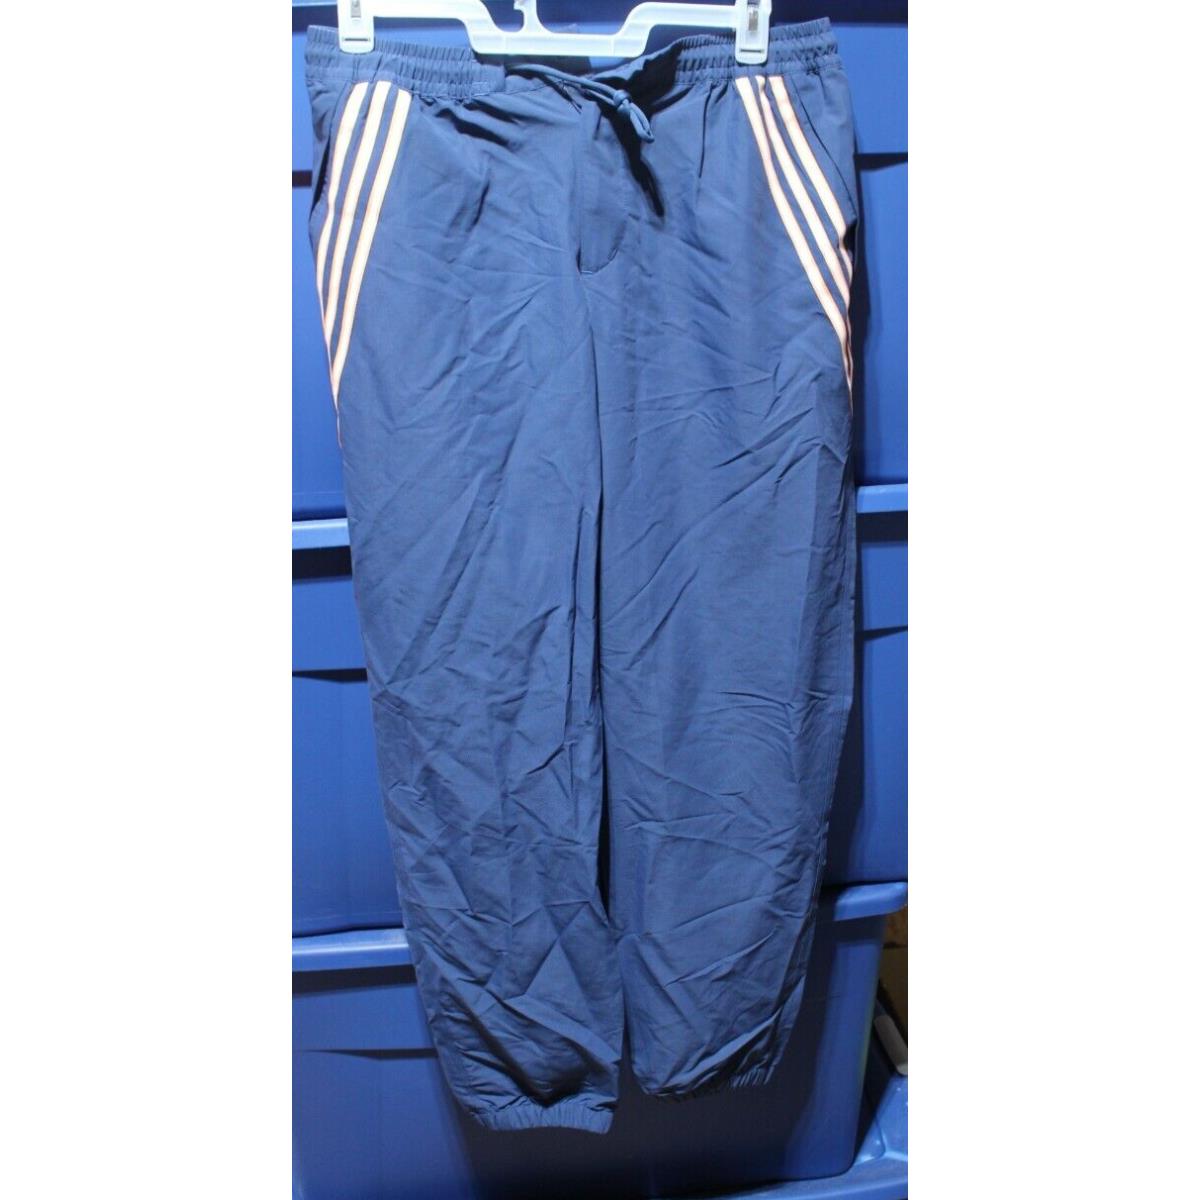 Adidas Men`s Workshop Pants Blue Orange Lightweight Size Large FU1010